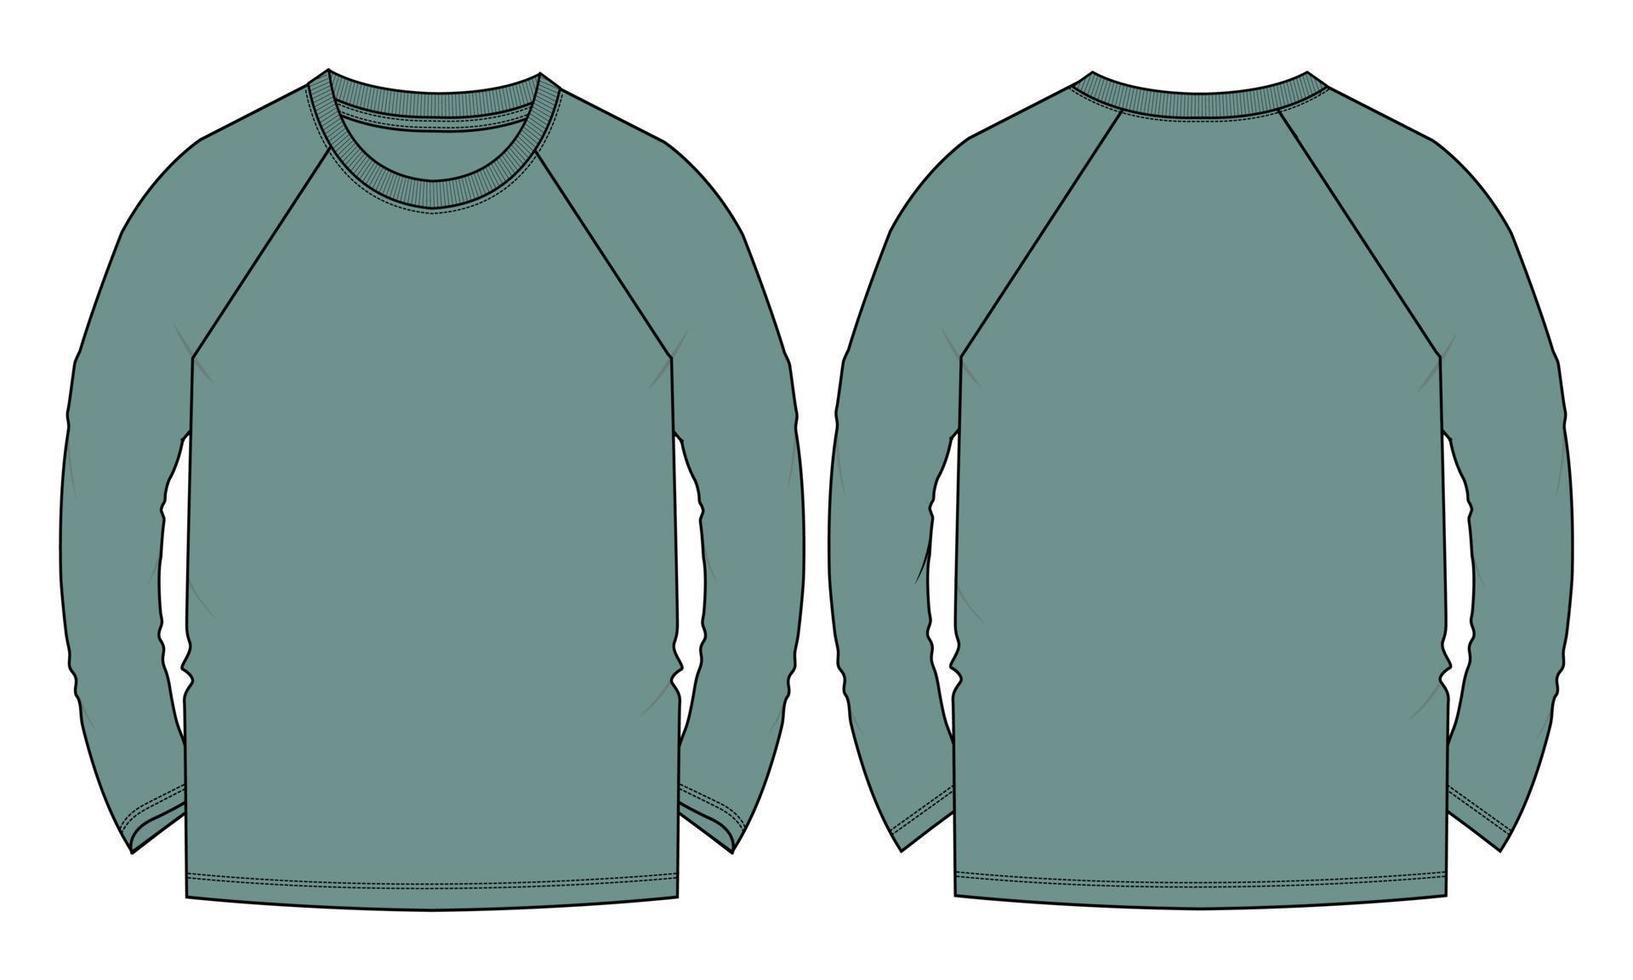 camiseta de manga larga raglán moda técnica boceto plano ilustración vectorial plantilla de color verde vector